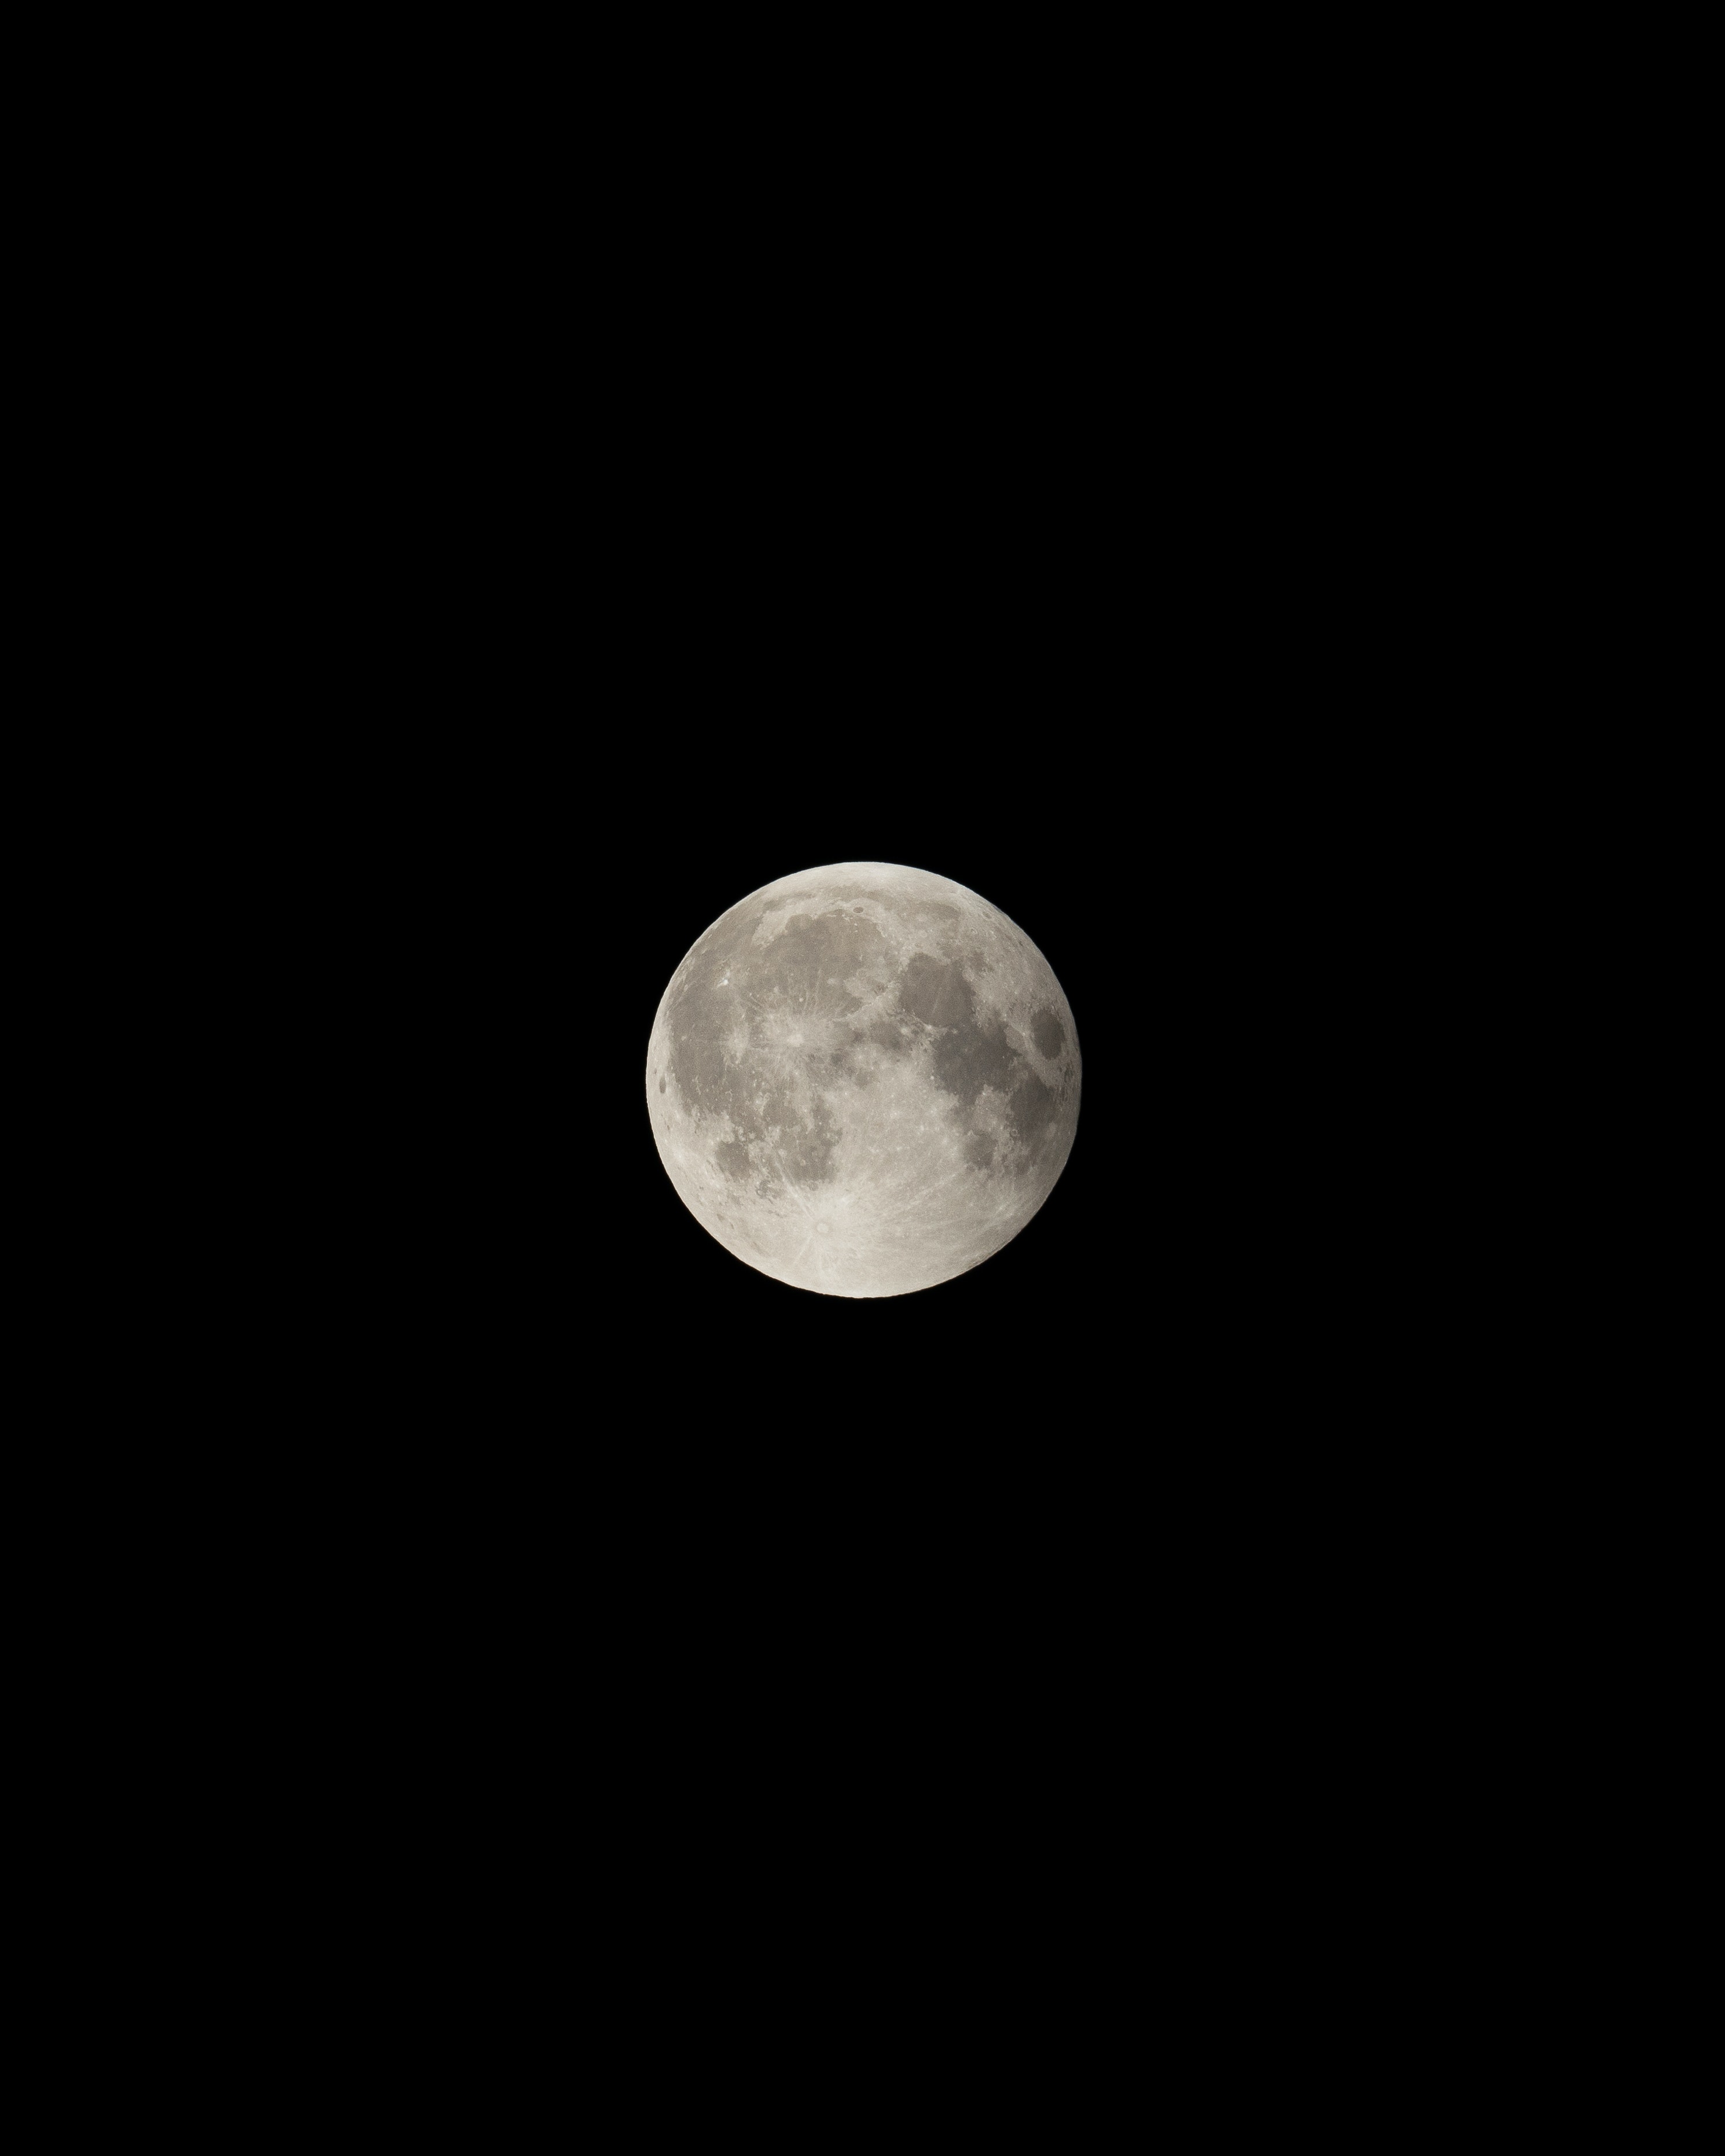 A full moon in a black sky. - Moon